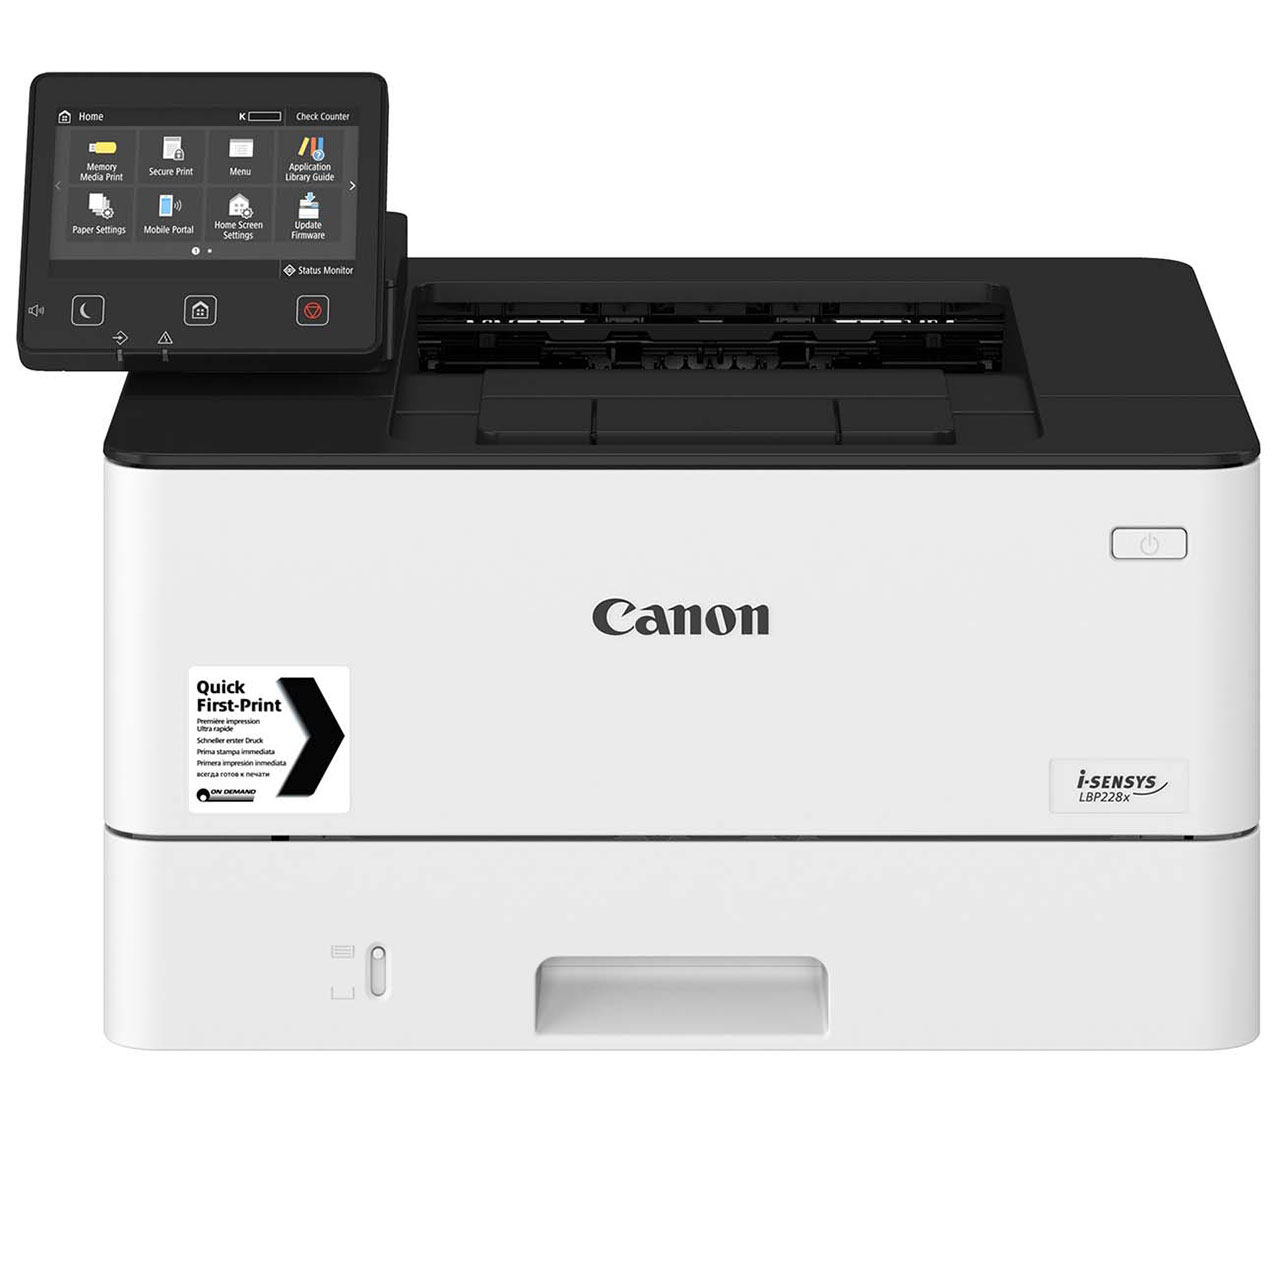 Toner cartridge compatible with Canon i-SENSYS LBP228x